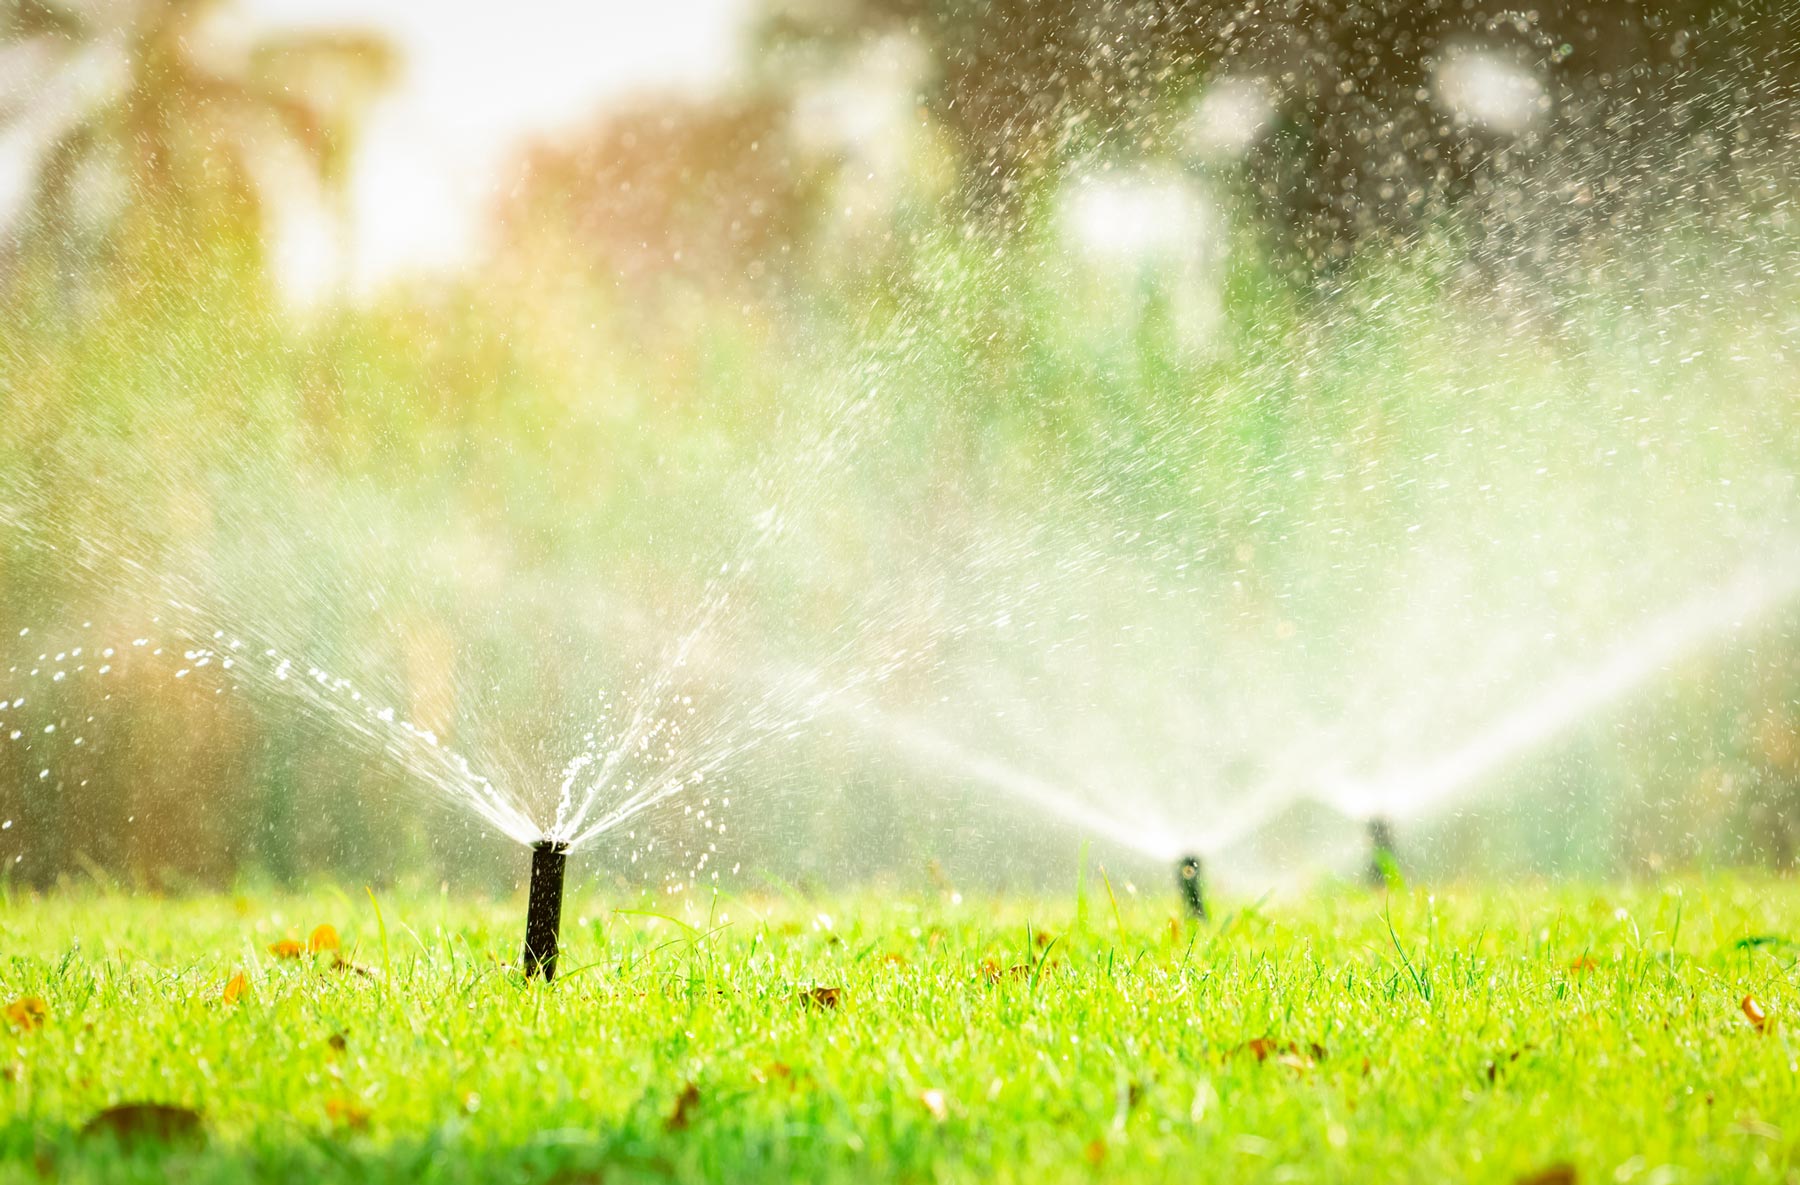 Sprinkler System — Decatur, IL — Keeping It Green Irrigation